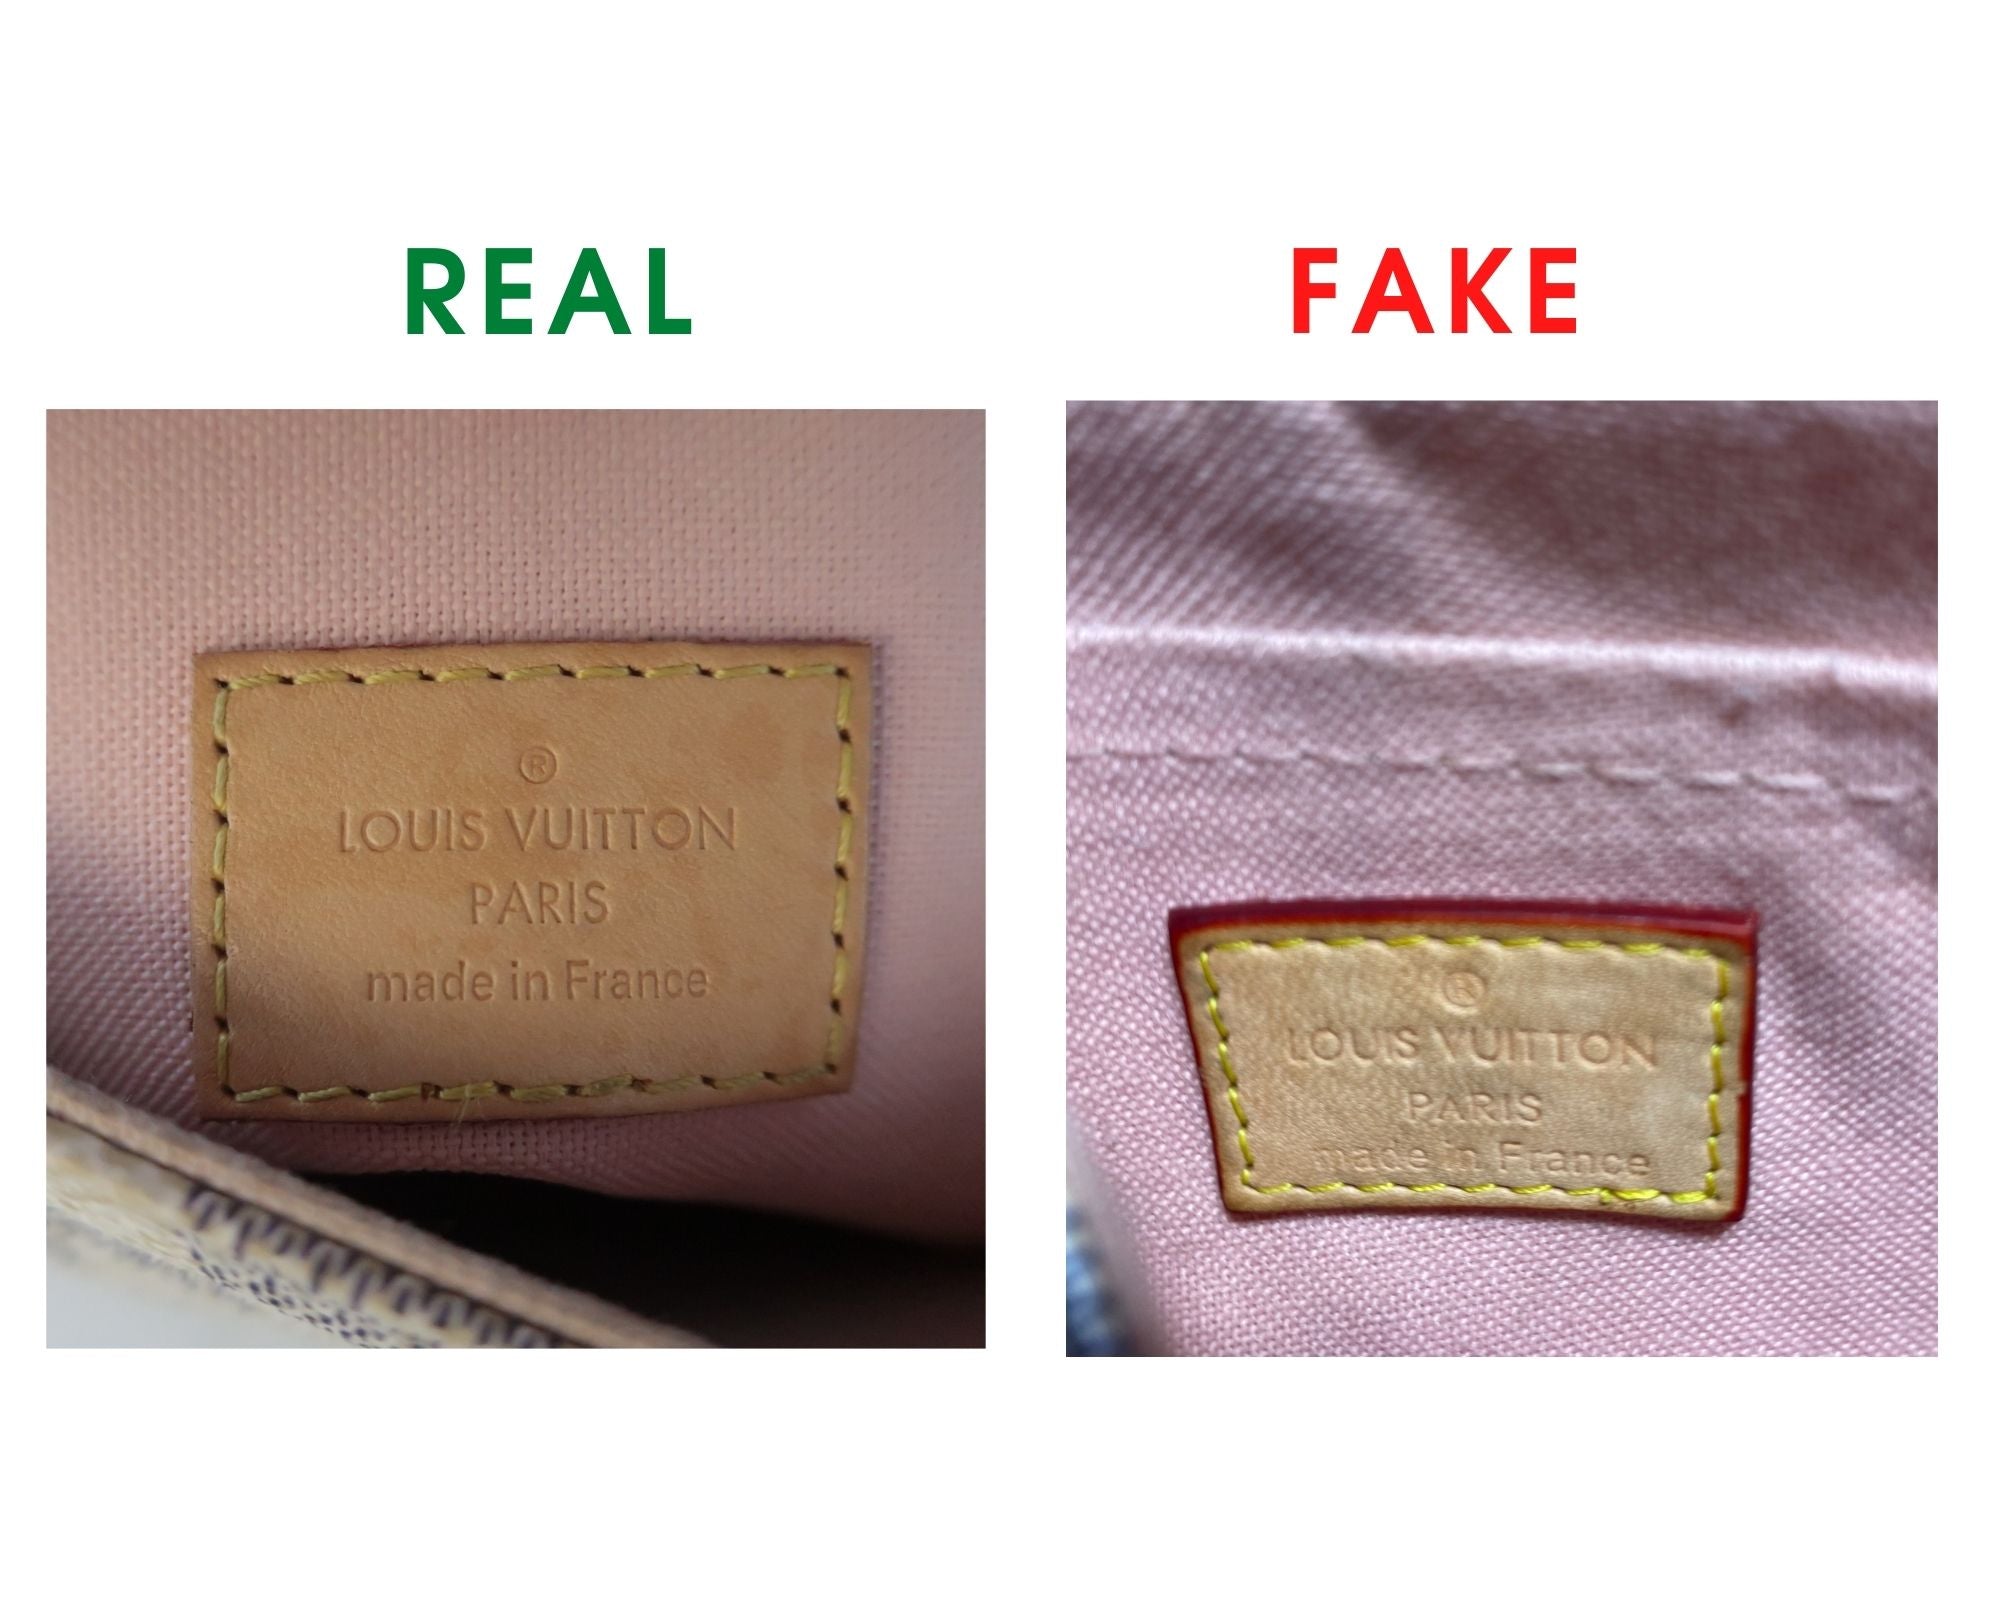 Revisión de bolsas de Louis Vuitton Croisette y Comparación Real Vs Fake (con fotos reales) Sello de calor